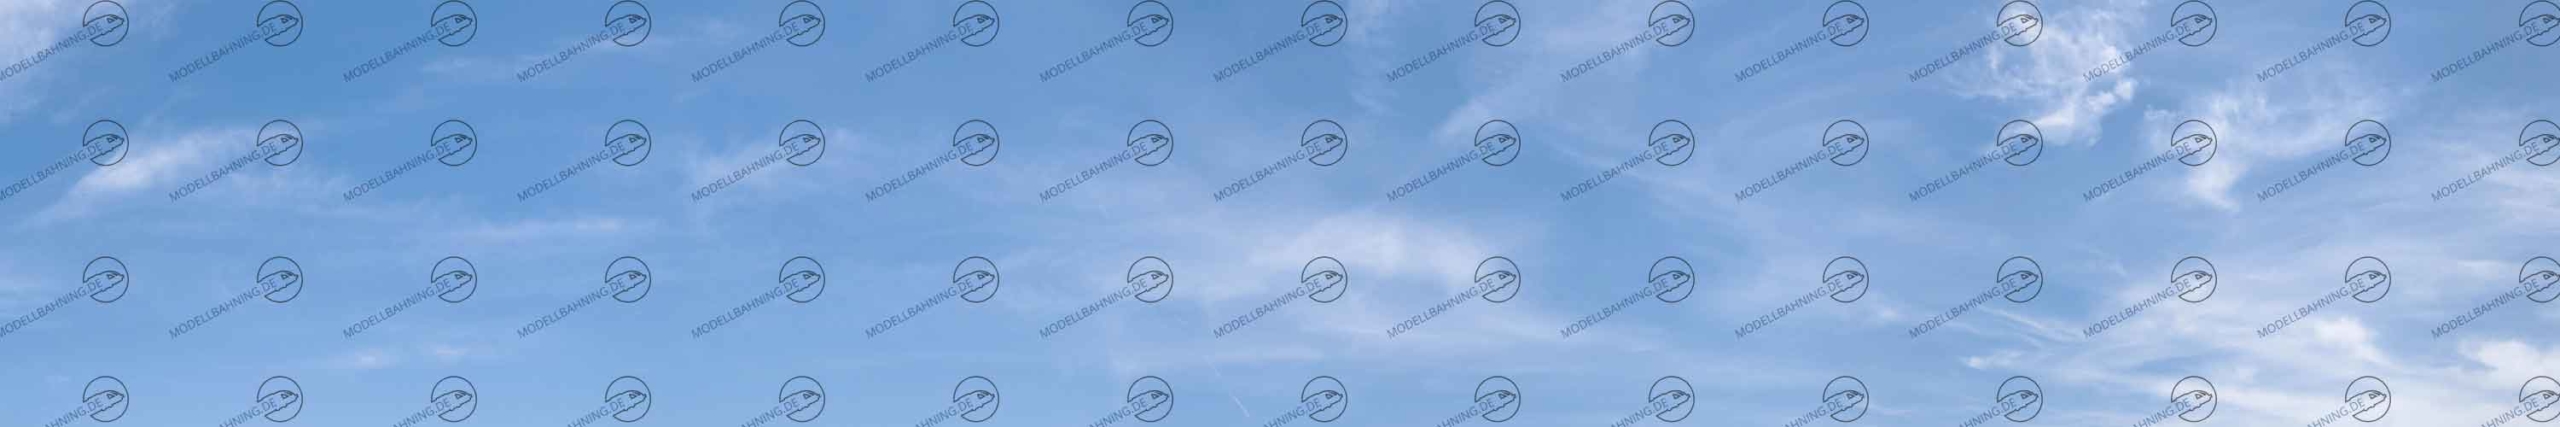 Endloser Himmel Teil 1 – Modellbahn Hintergrund 300cm x 50 cm 5